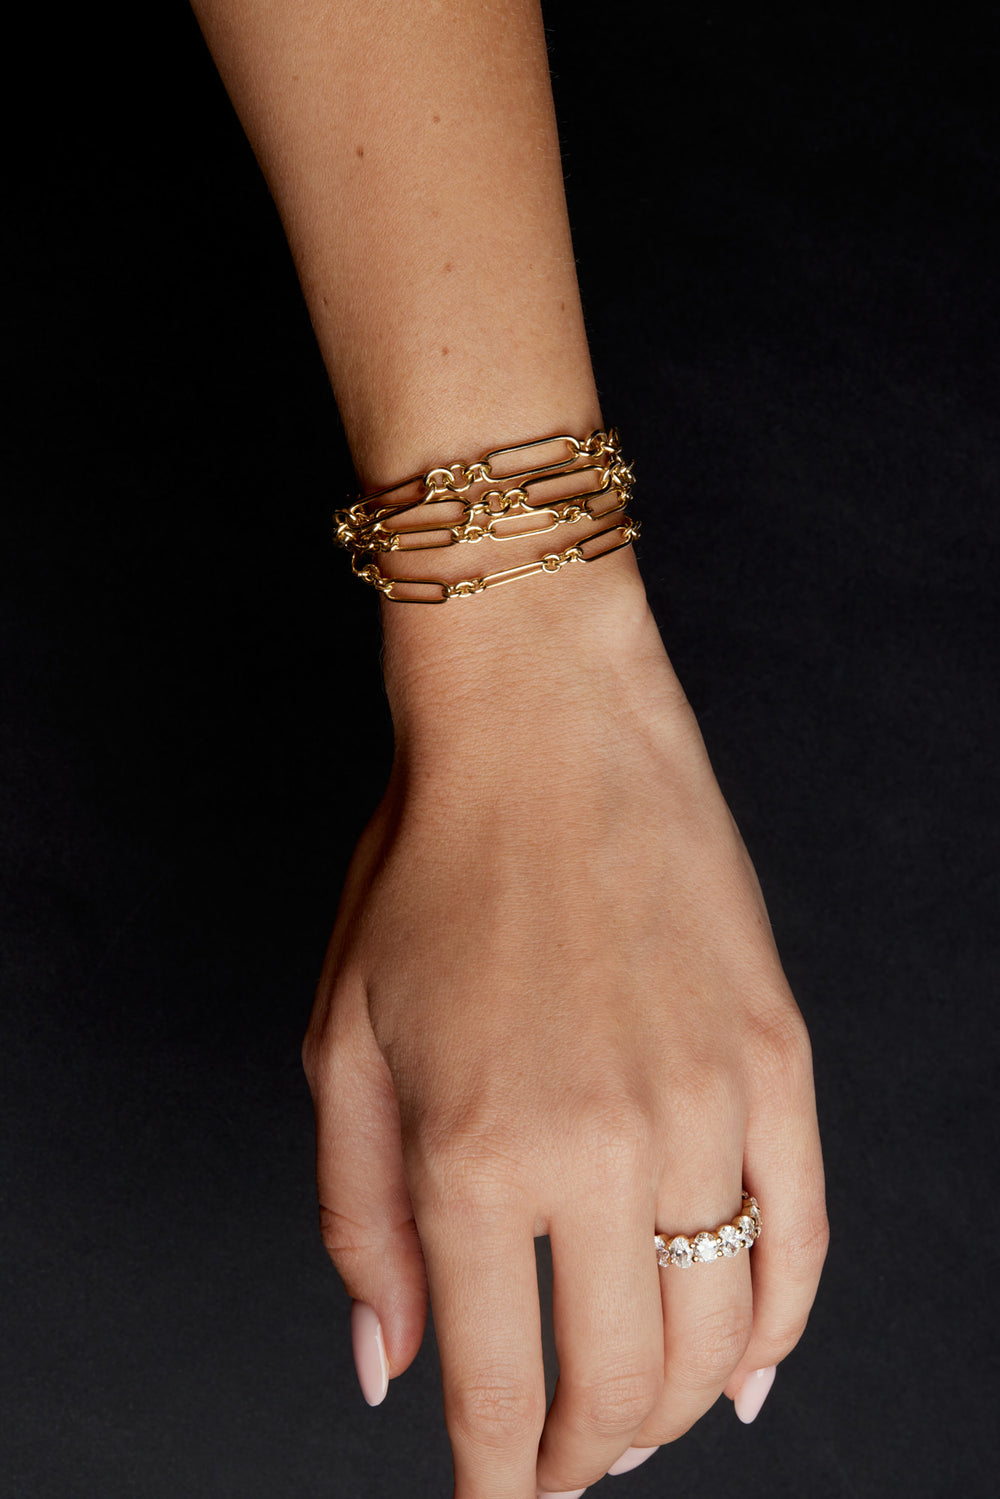 Mini Lennox Bracelet | Silver or 9K White Gold| Natasha Schweitzer